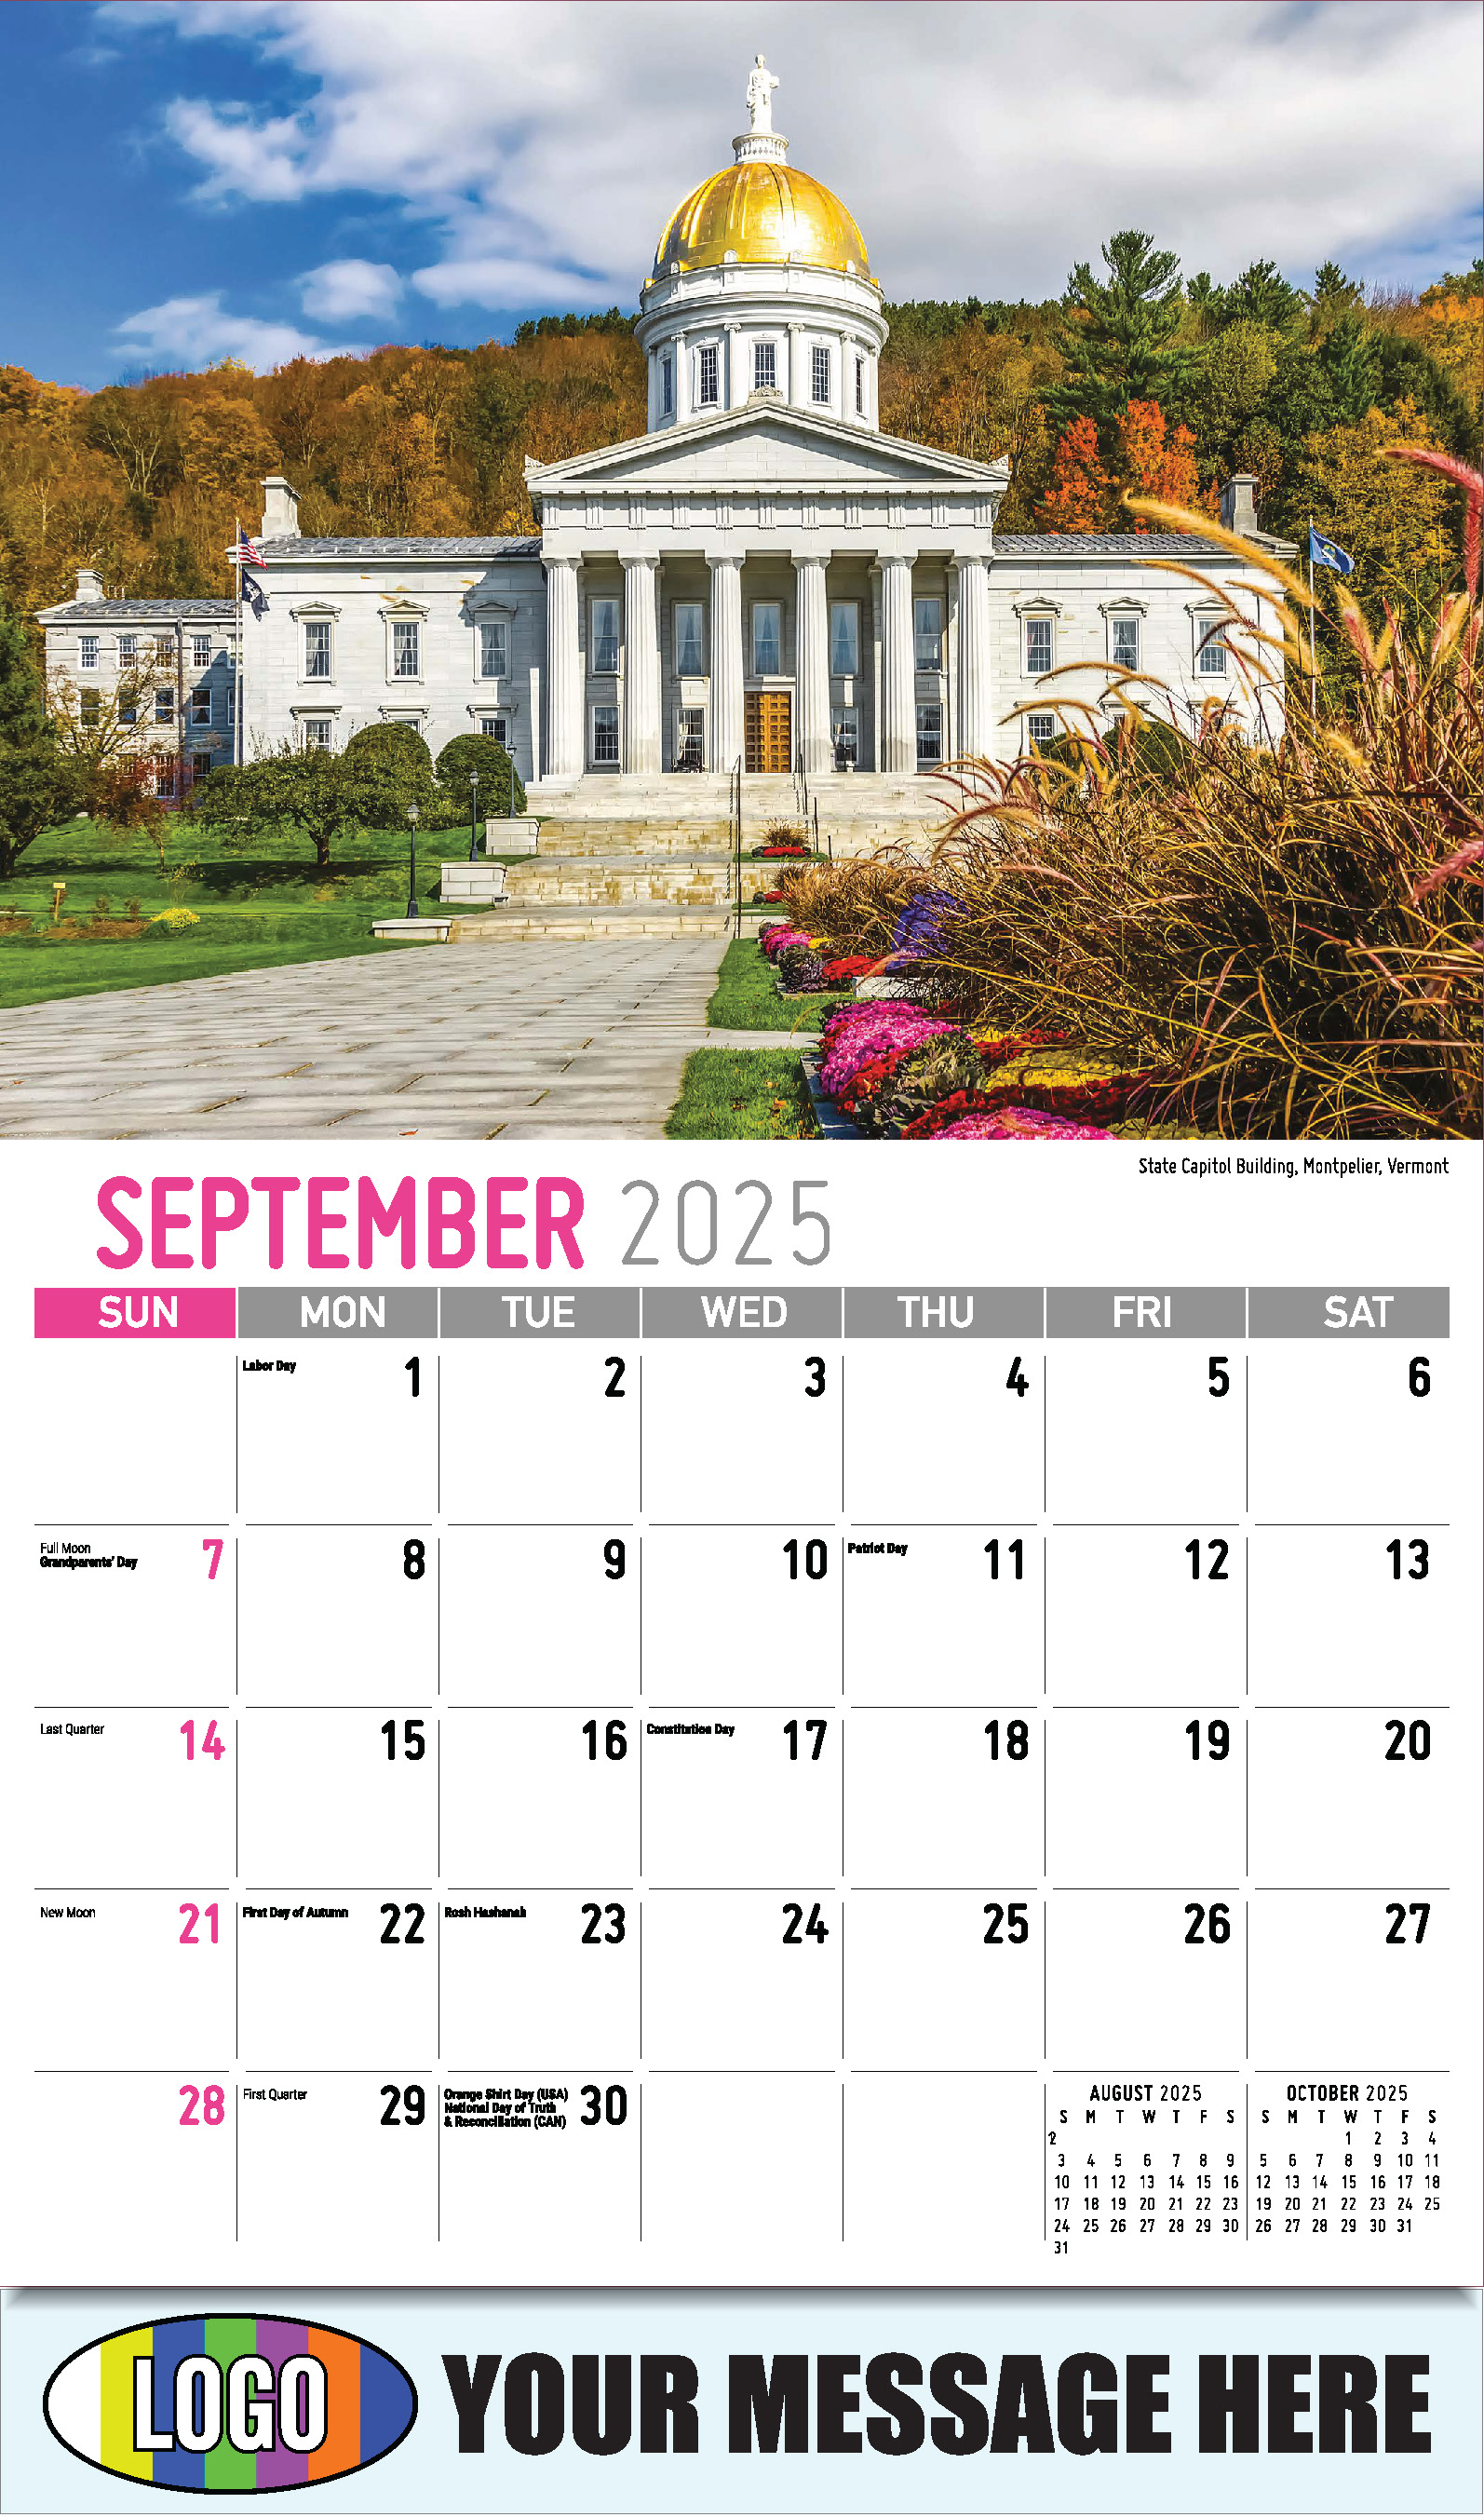 Scenes of New England 2025 Business Advertising Wall Calendar - September